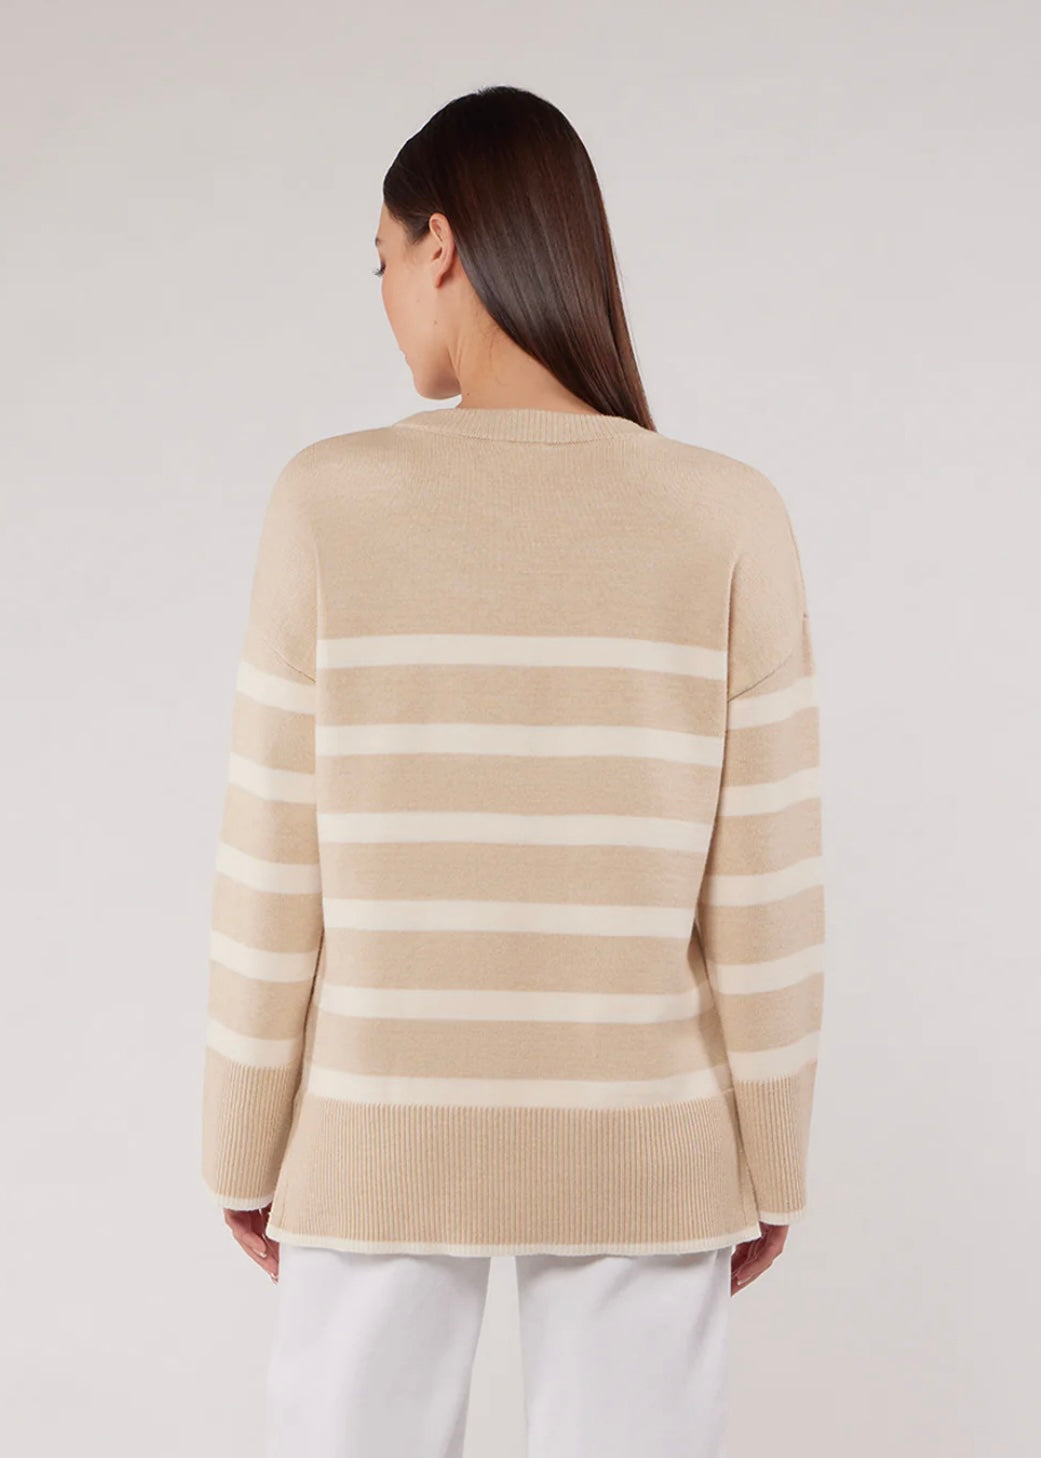 Elli Striped Sweater